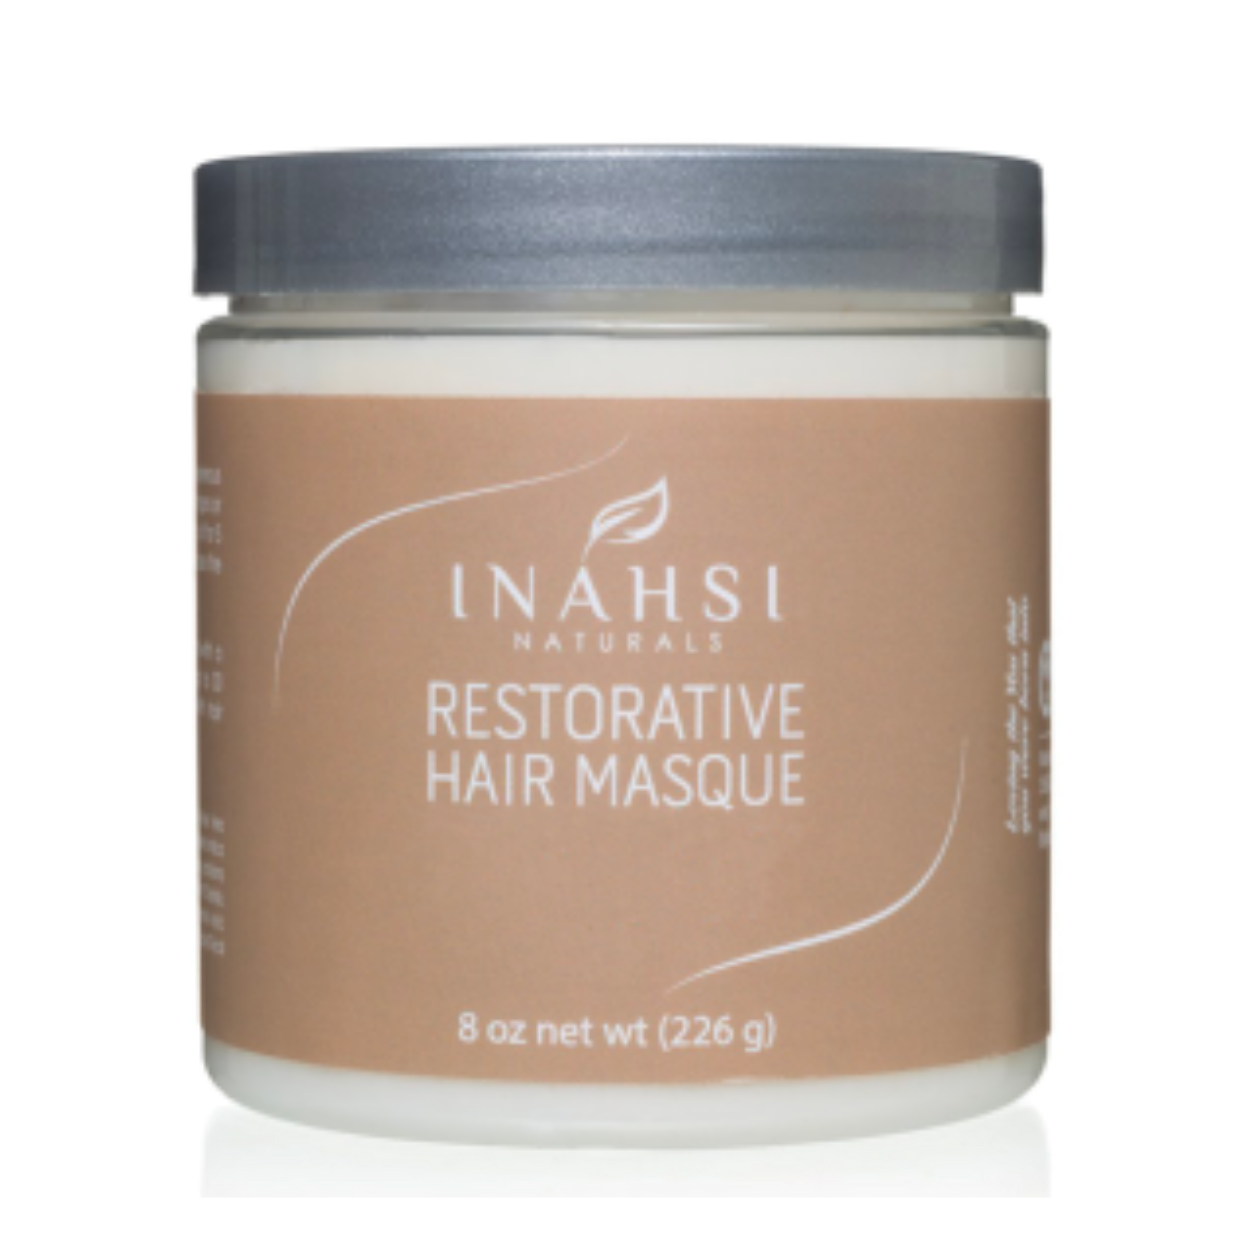 Inahsi Restorative Hair Masque